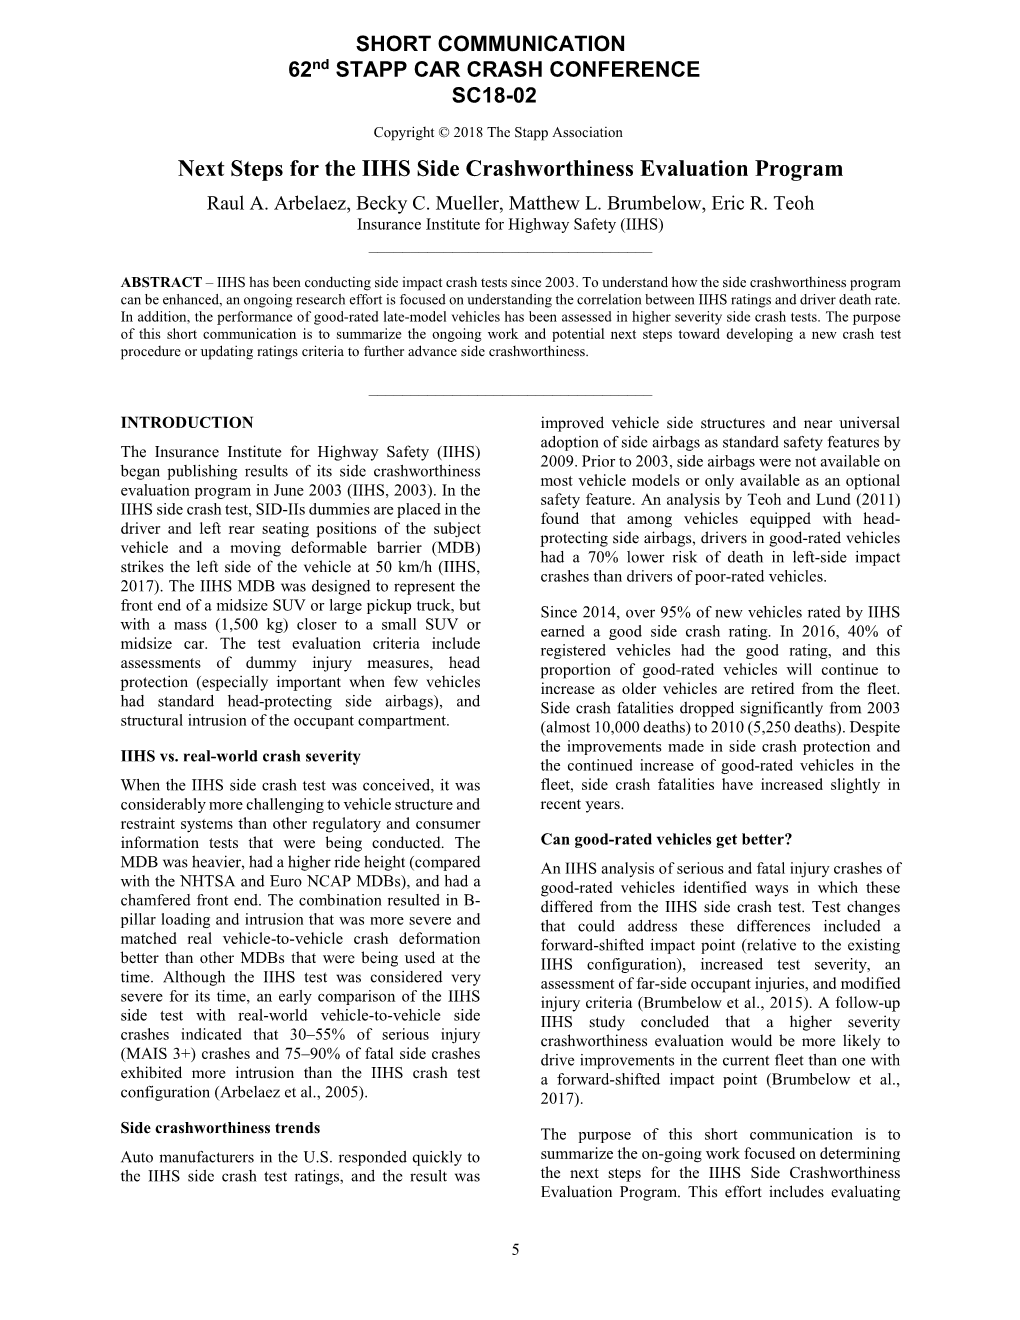 Next Steps for the IIHS Side Crashworthiness Evaluation Program Raul A